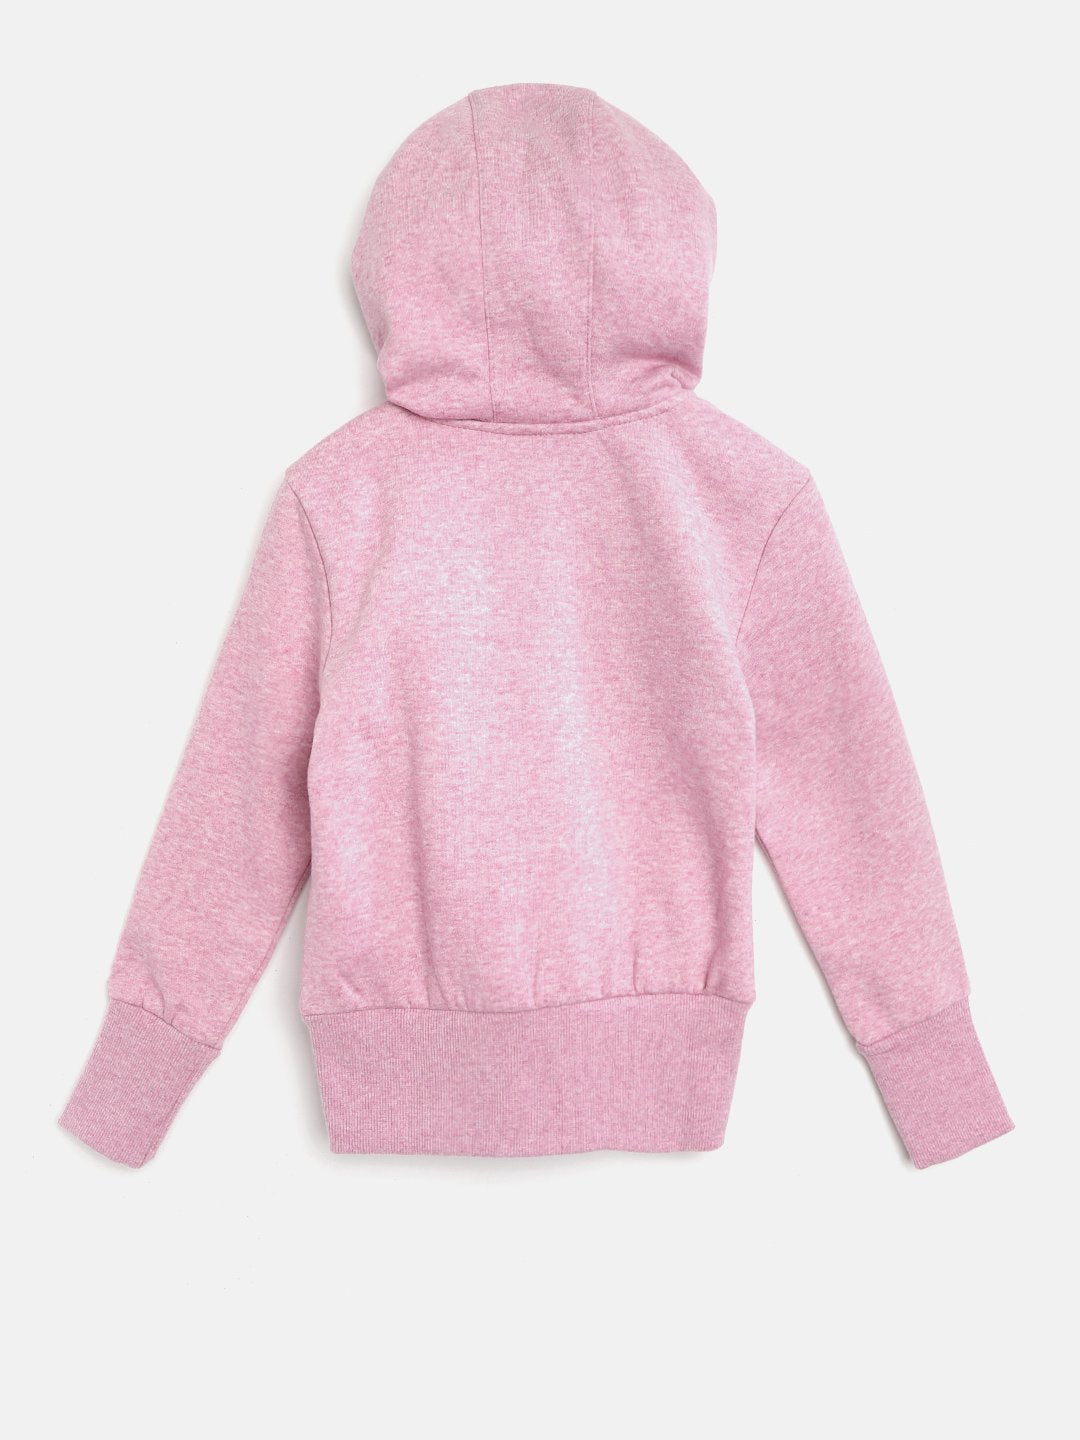 Alcis Girls Pink Solid Hooded Sweatshirt